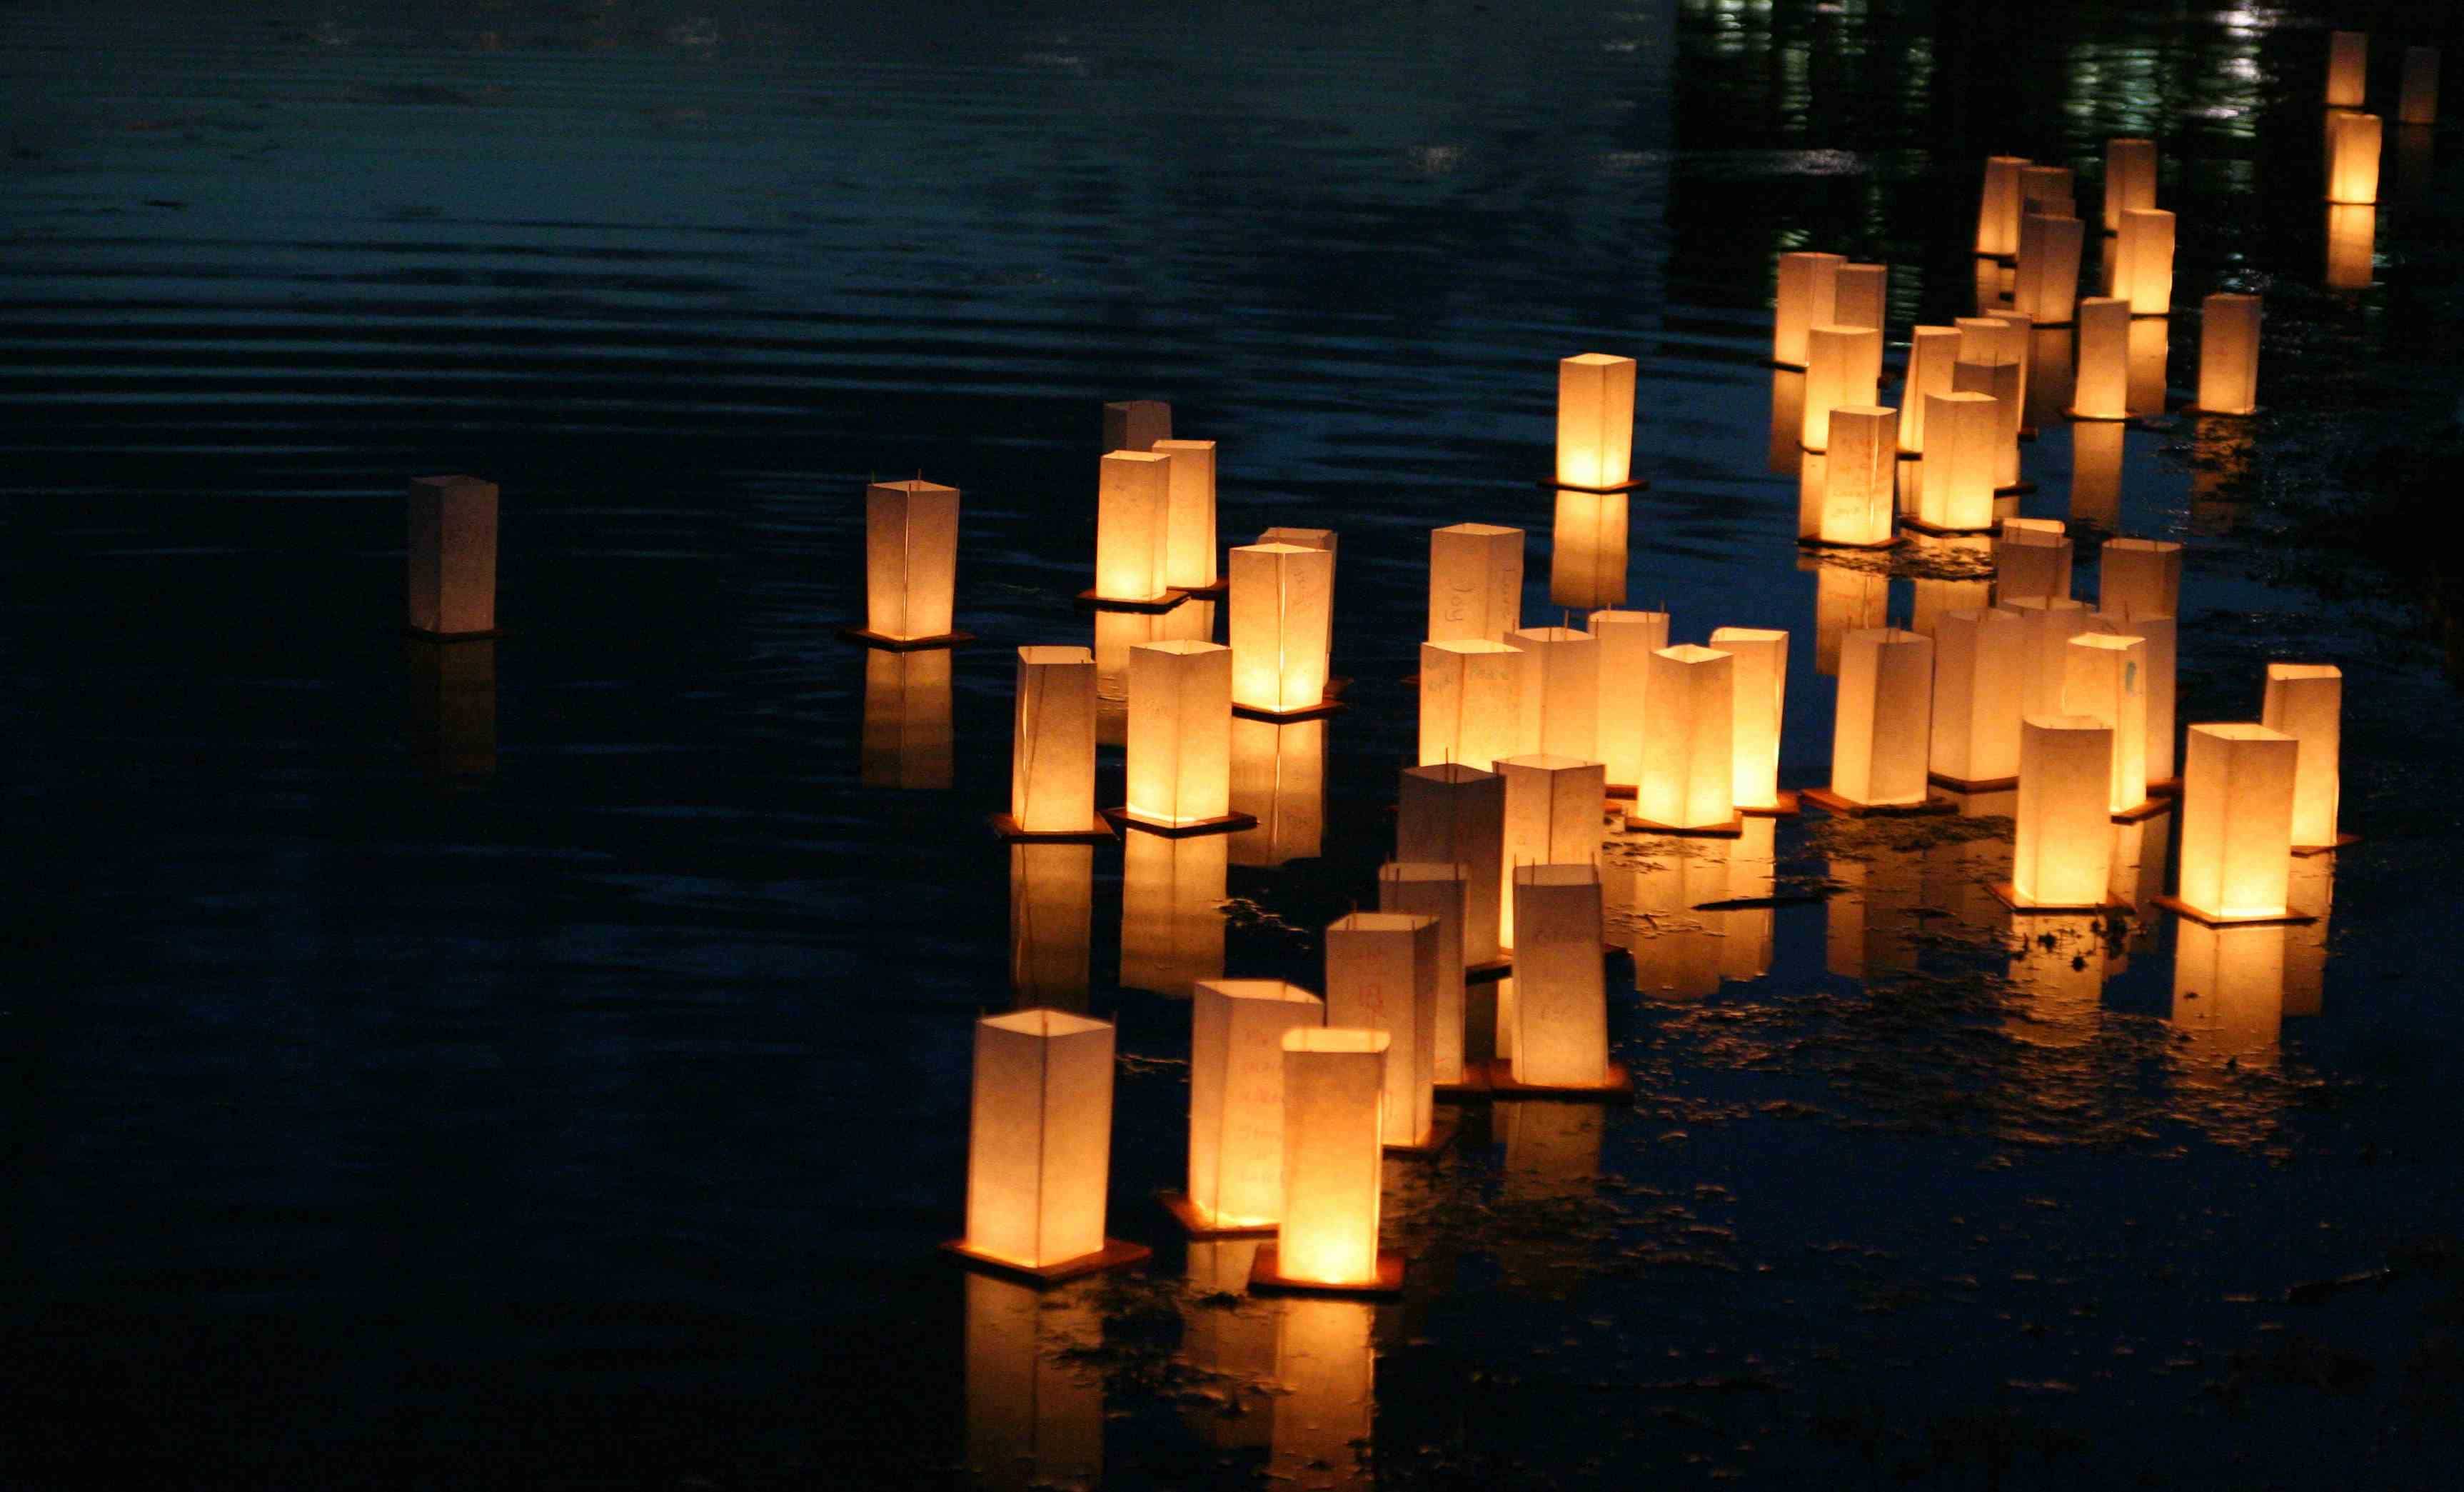 Enjoy The RenoSparks Water Lantern Festival July 21! Reno